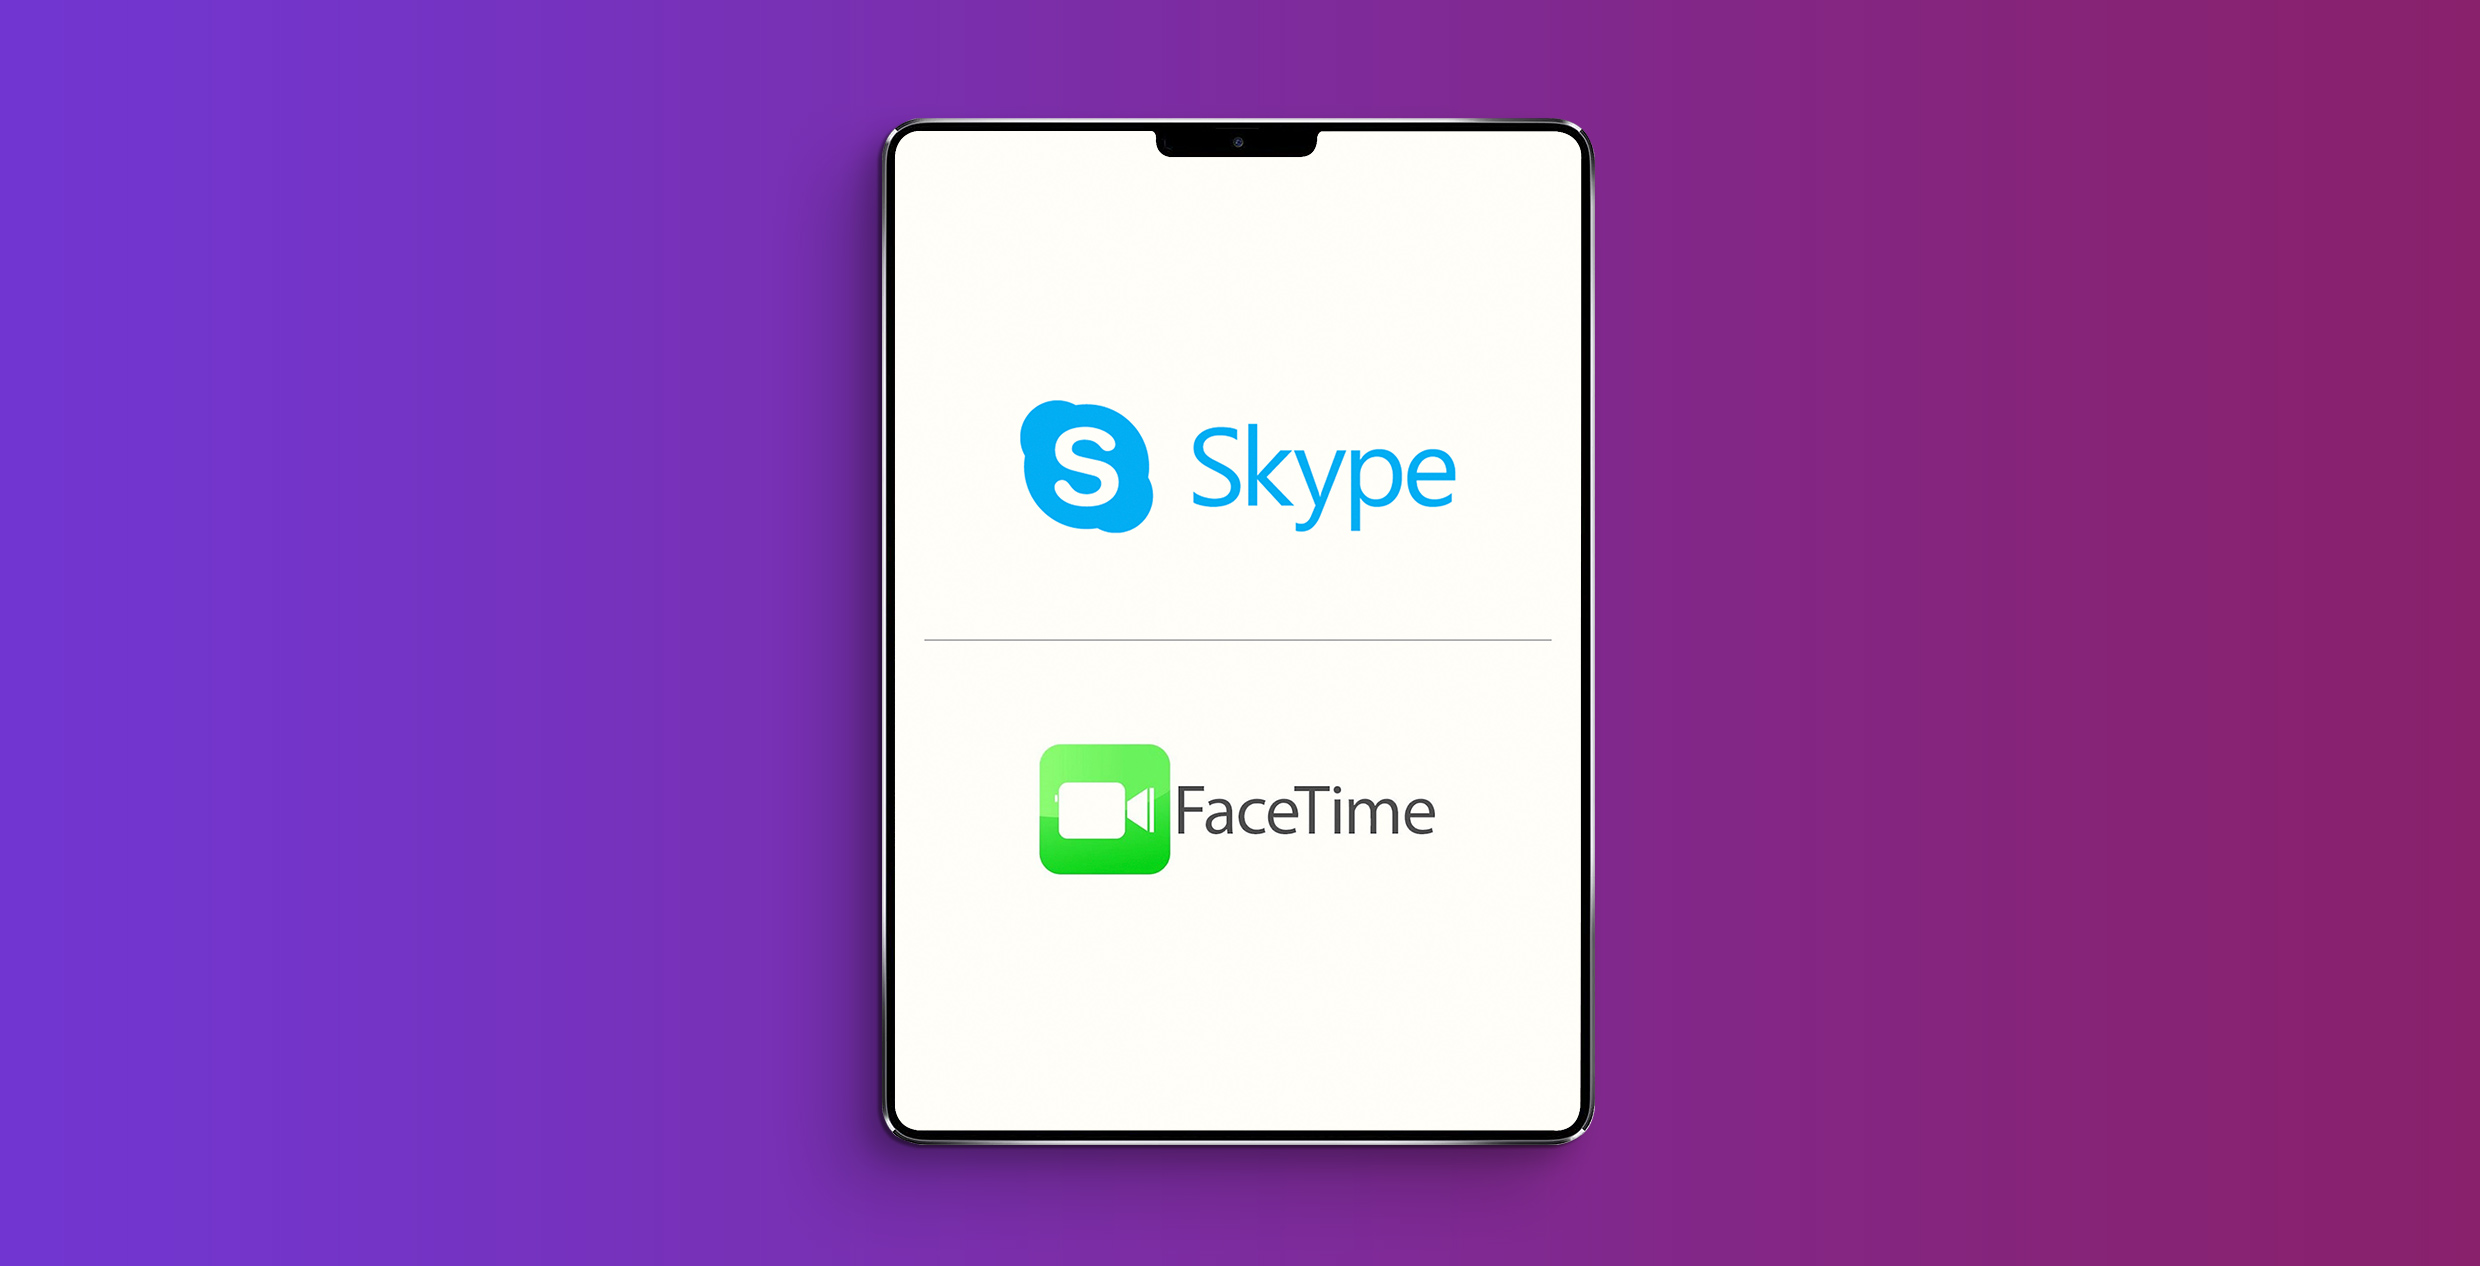 Konsultacje przez Skype lub FaceTime